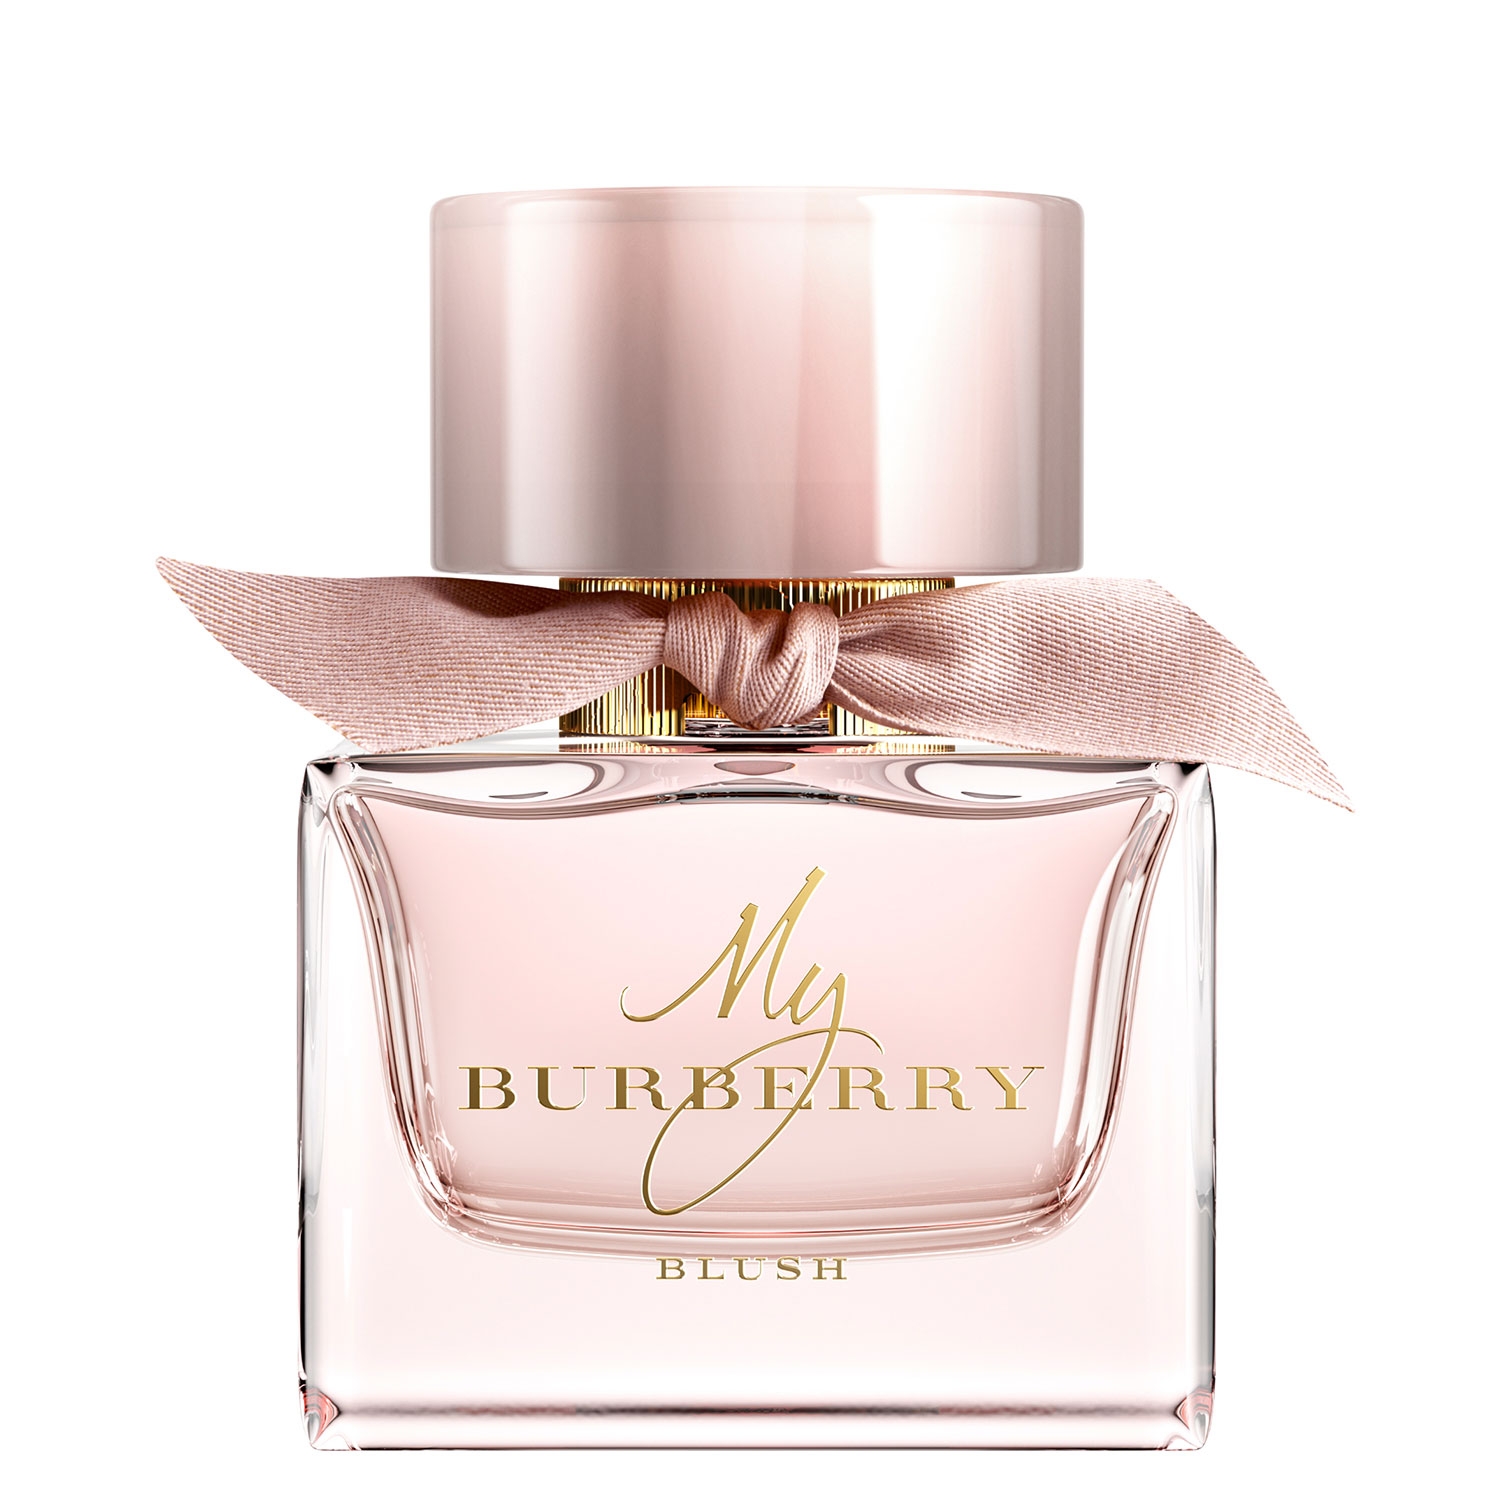 Produktbild von My Burberry - Blush Eau de Parfum